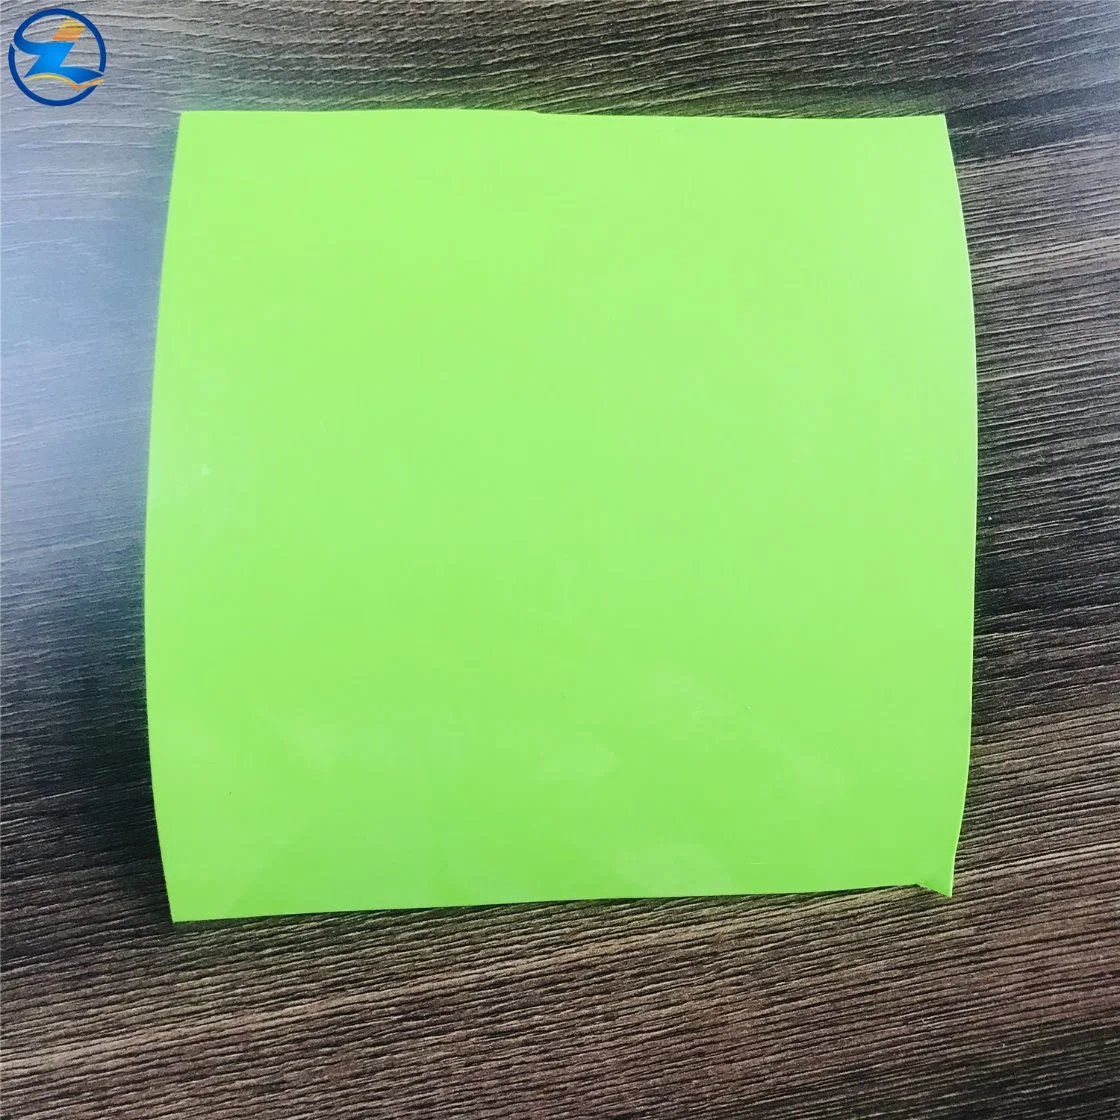 Rigid Colored PVC Plastic Film Sheet Roll for Card Making